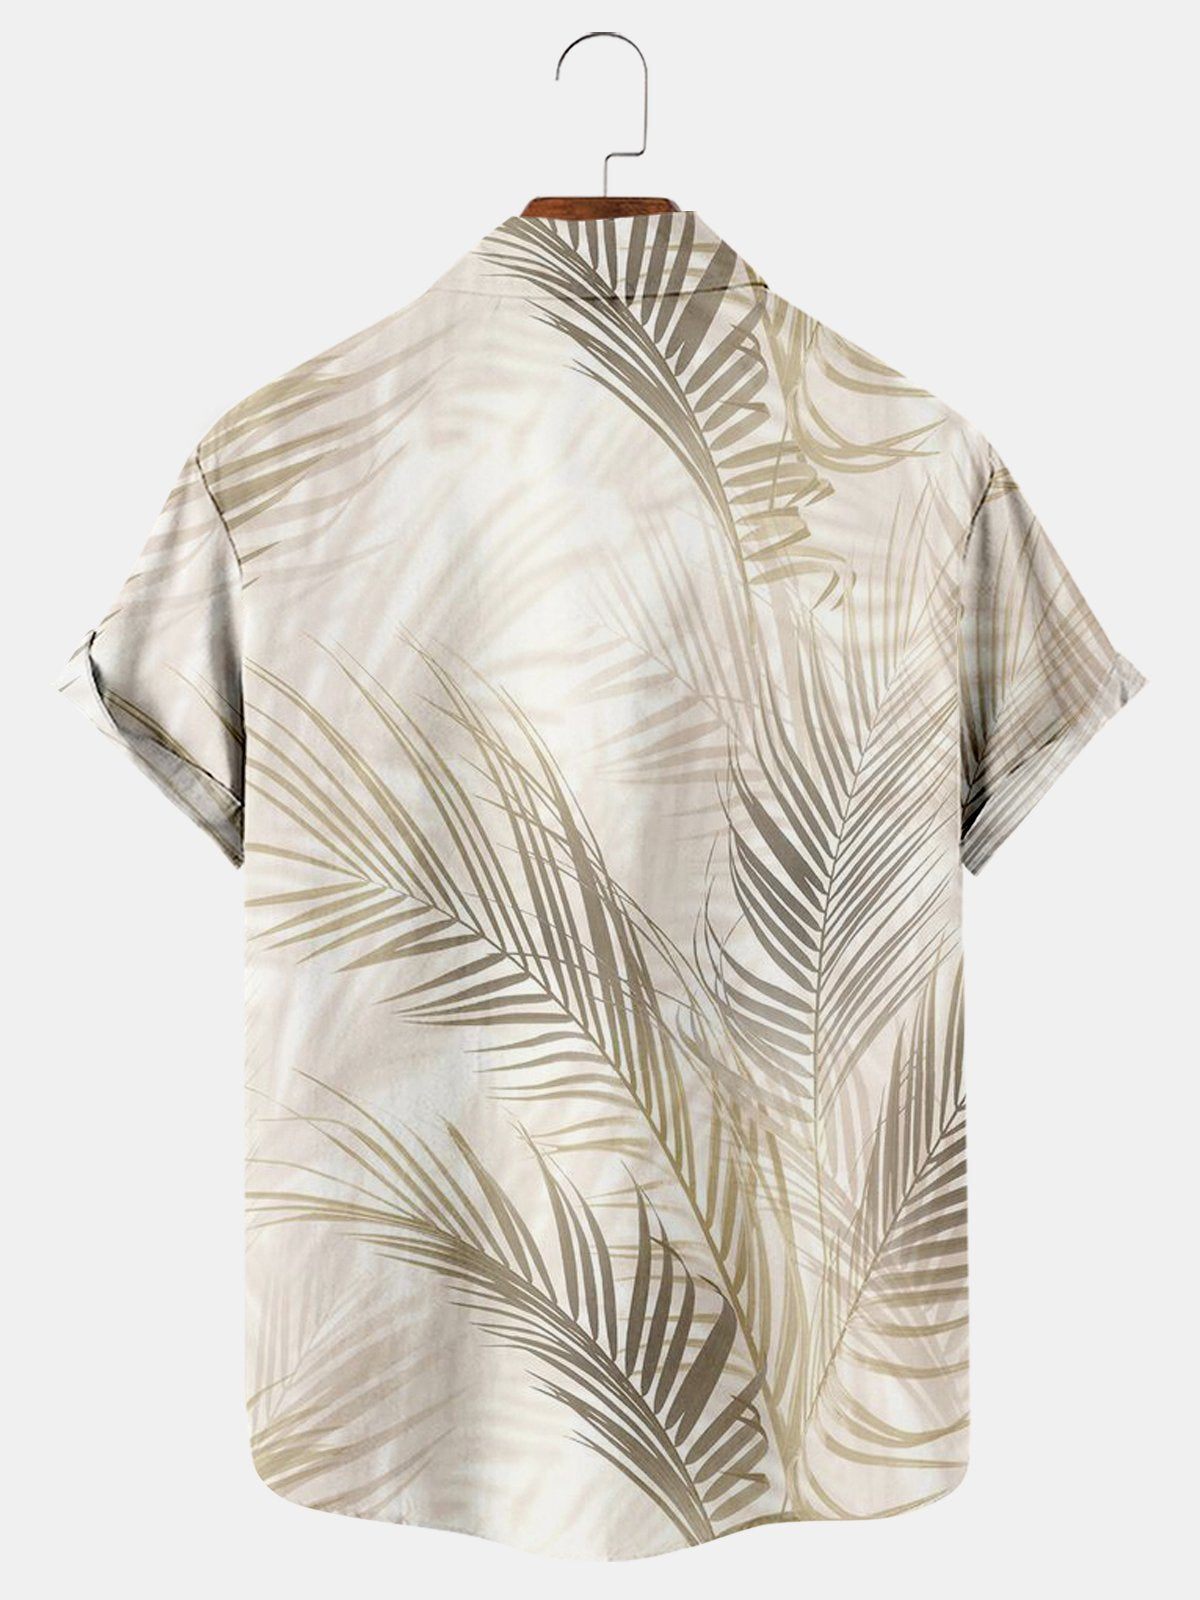 Tropical Palm Leaf Print Shirt